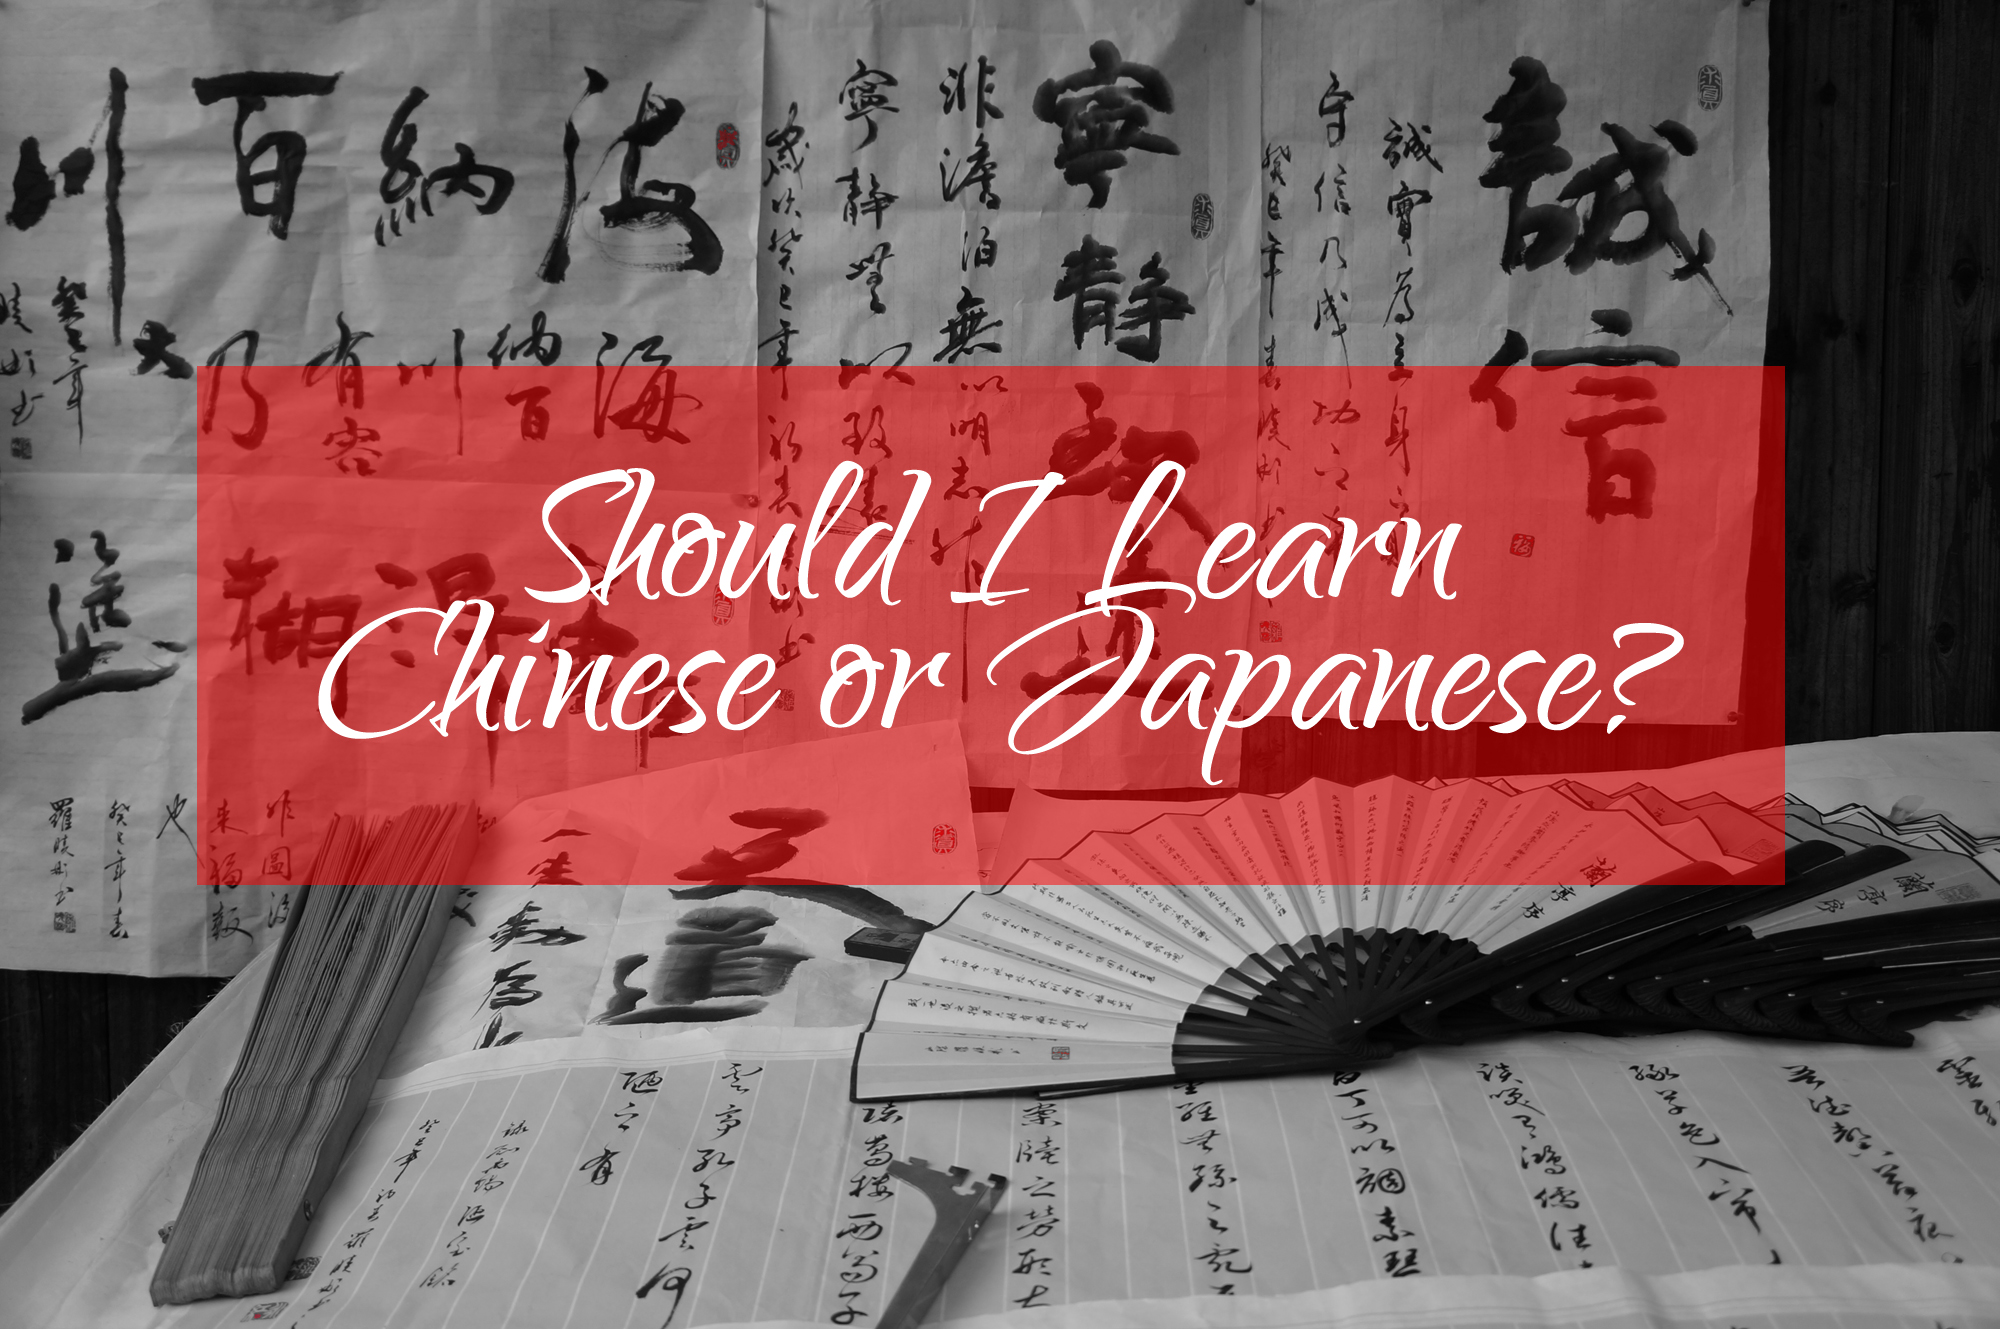 Should I take Chinese or Japanese?